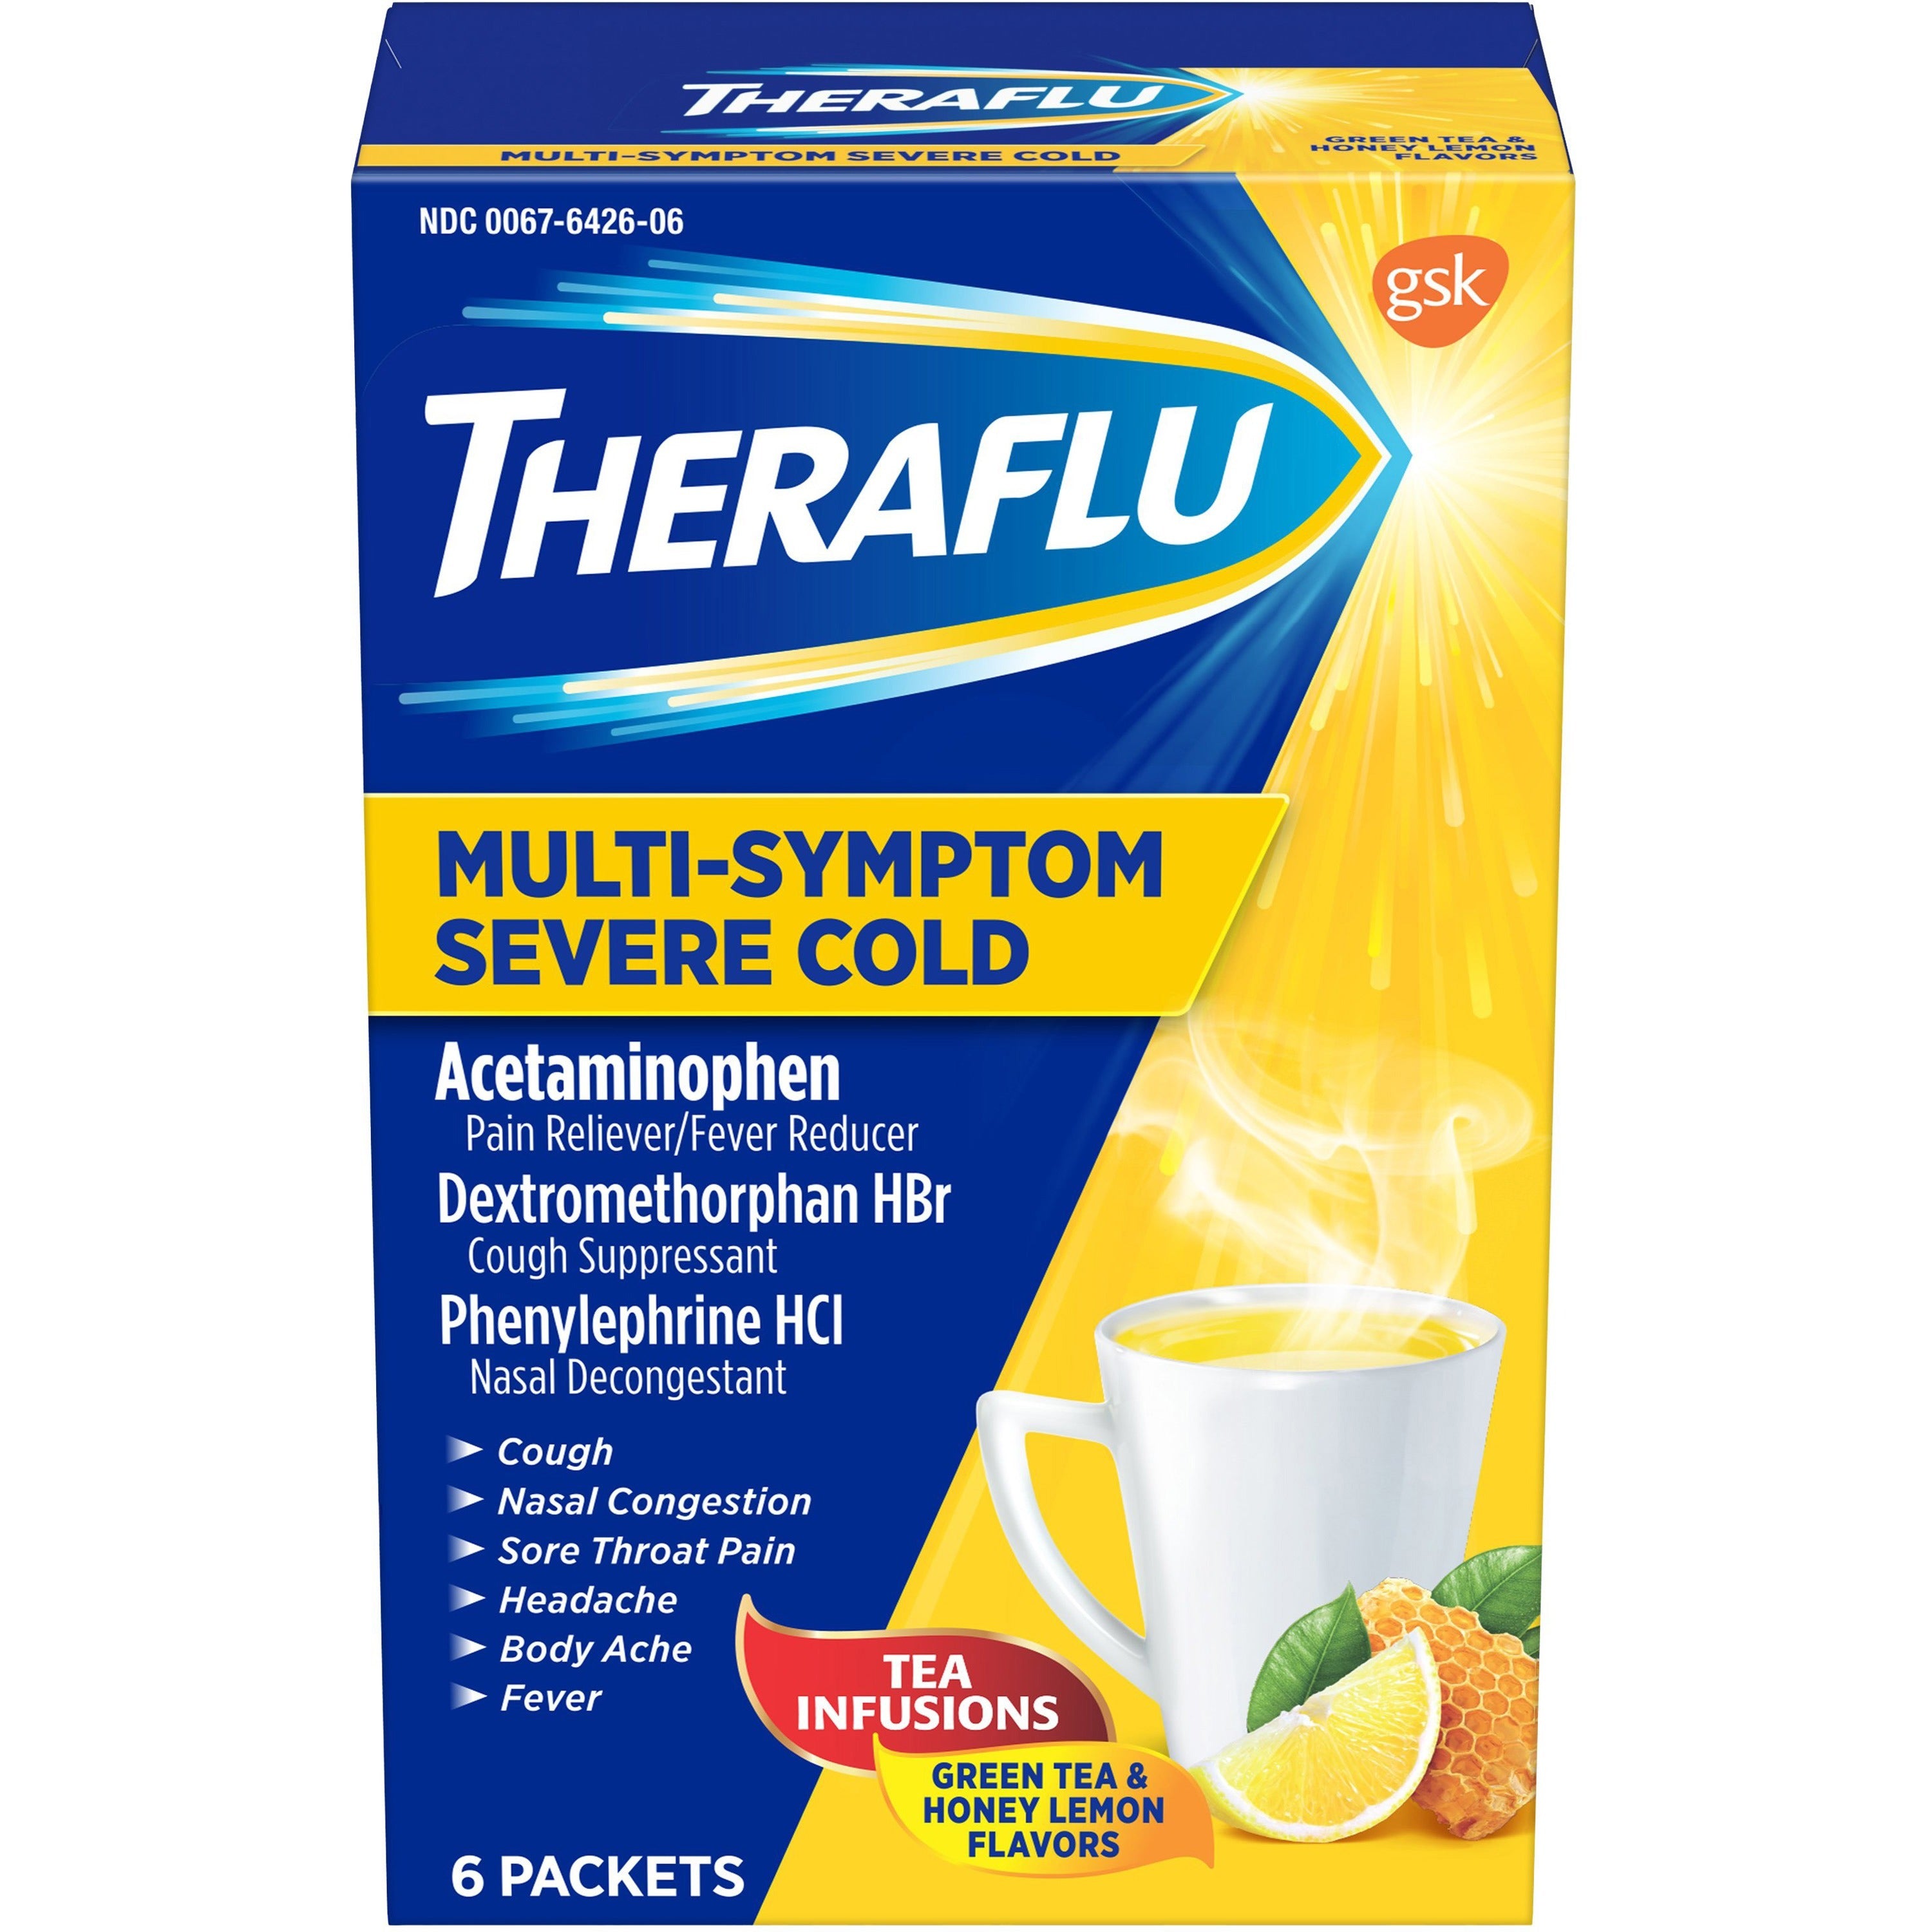 Theraflu Multi-Symptom Severe Cold & Cough Medicine - For Cold, Flu, Nasal Congestion, Cough, Body Ache, Sore Throat, Sinus Pain, Headache, Fever - Honey Lemon - 1 Each - 6 Per Box - 1